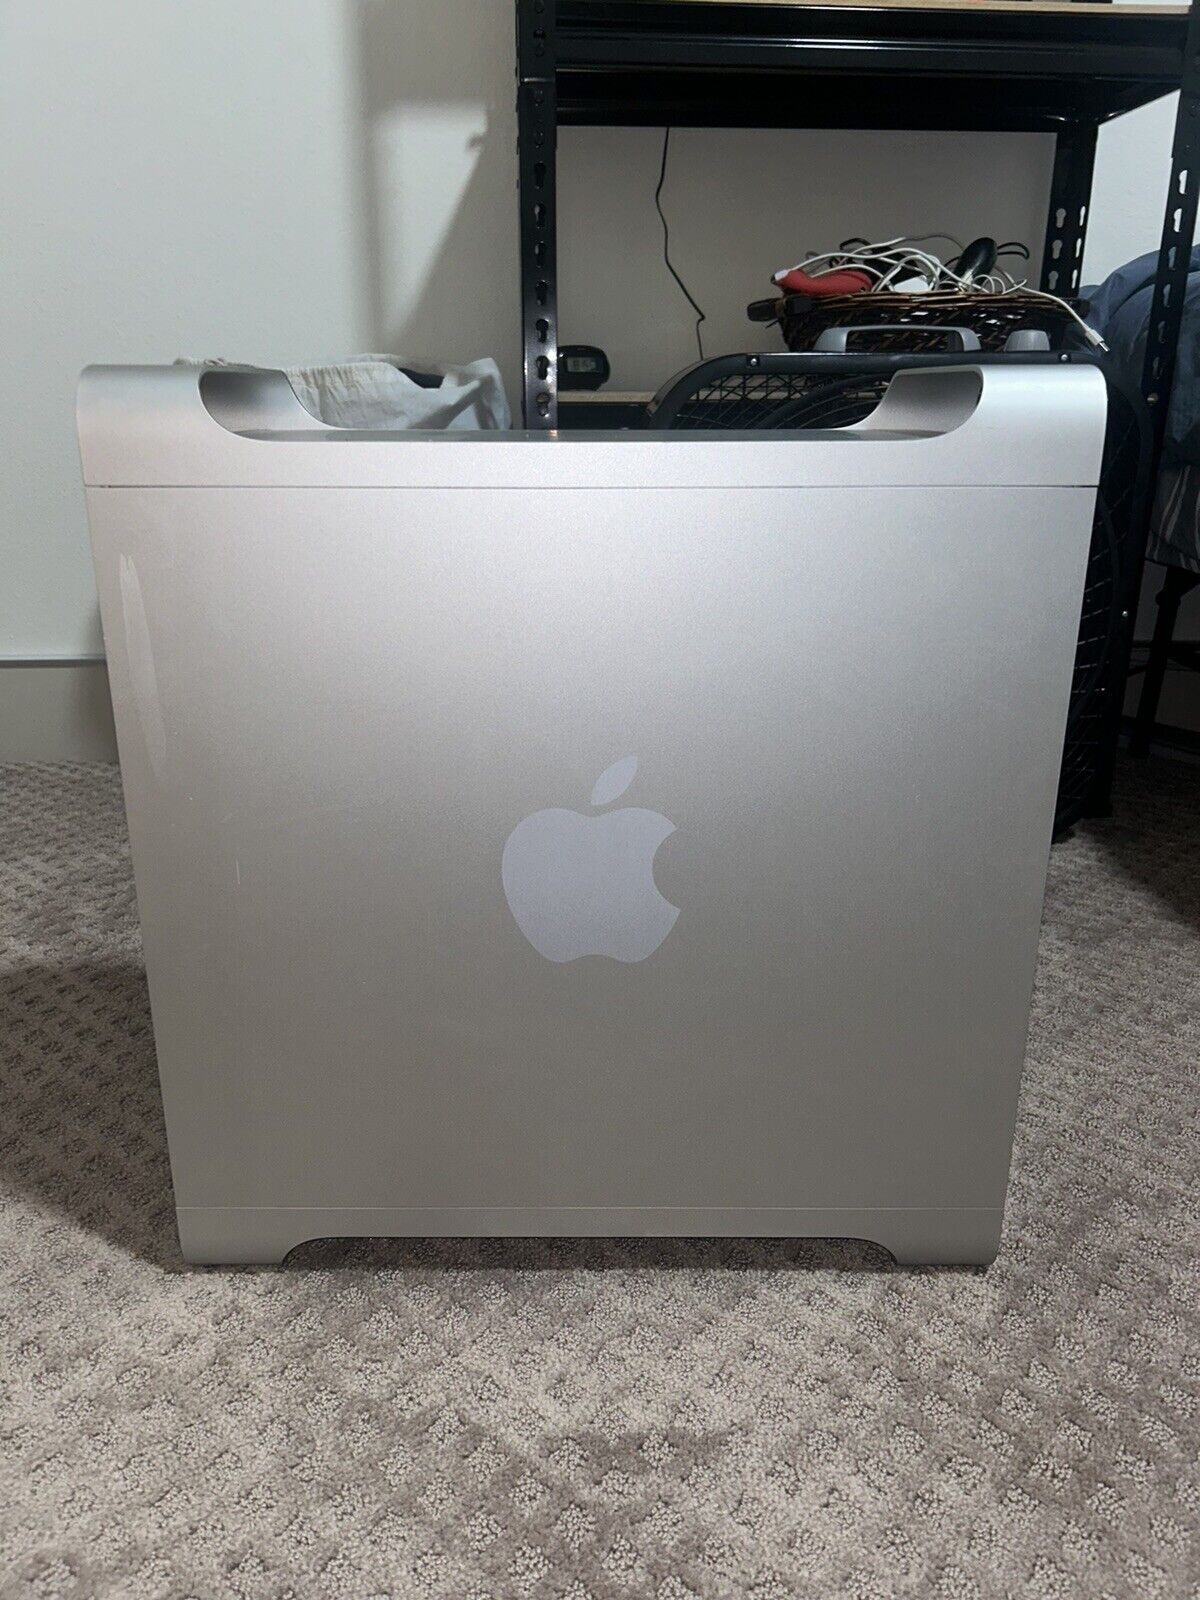 Apple Power Mac G5 Tower  Model A1047 ARIZONA WESTERN COLLEGE .  40LBS HEAVY